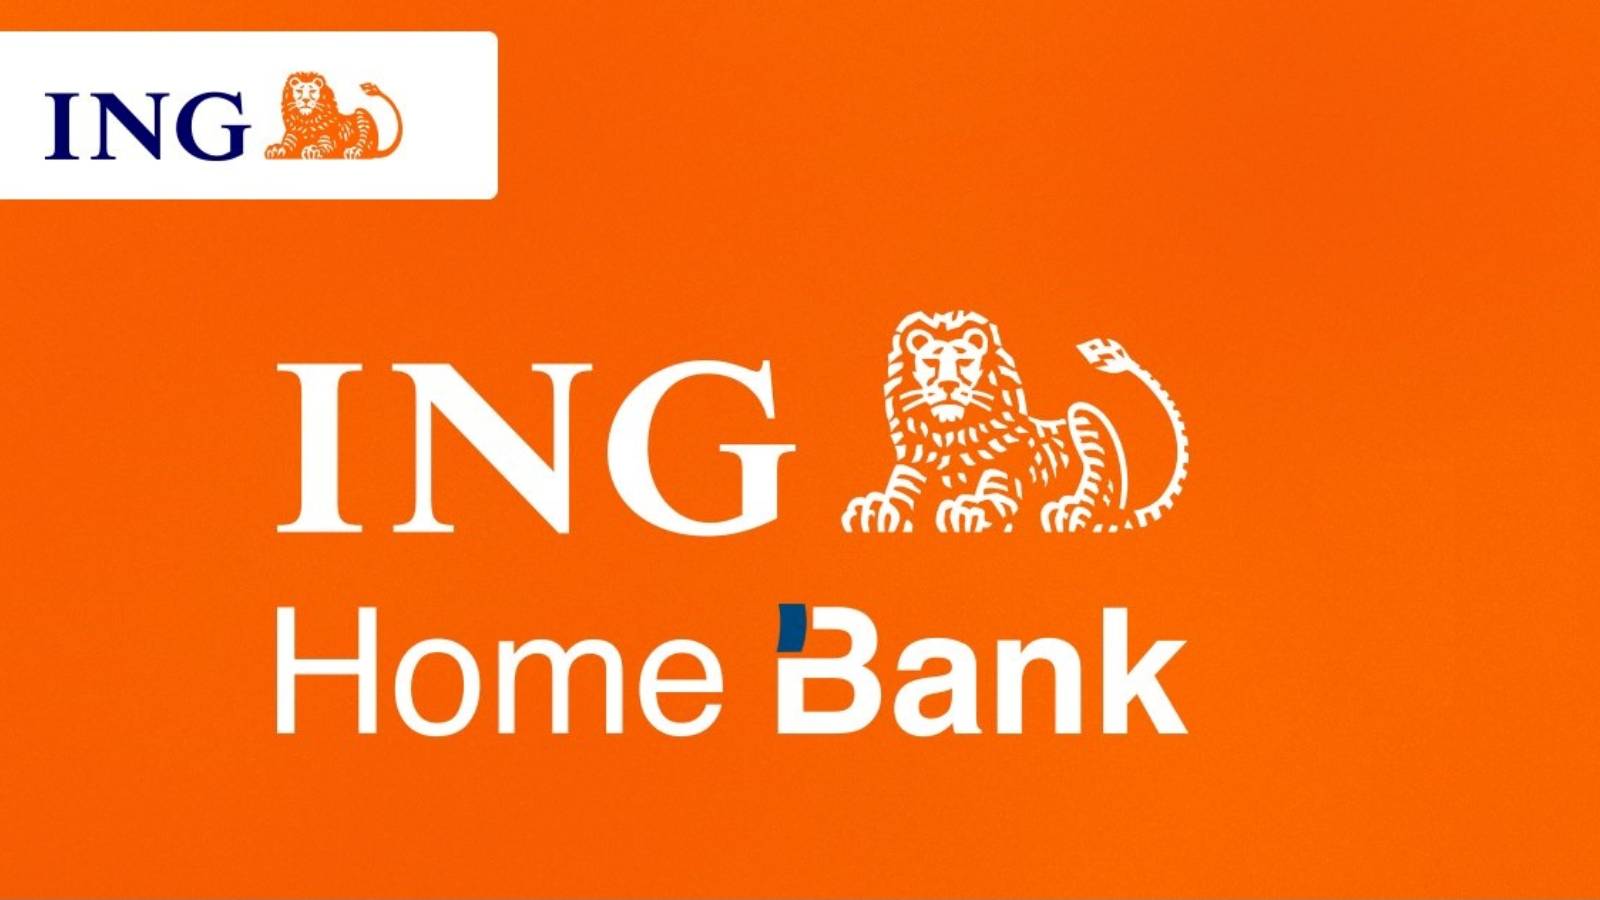 ING Bank actualizari